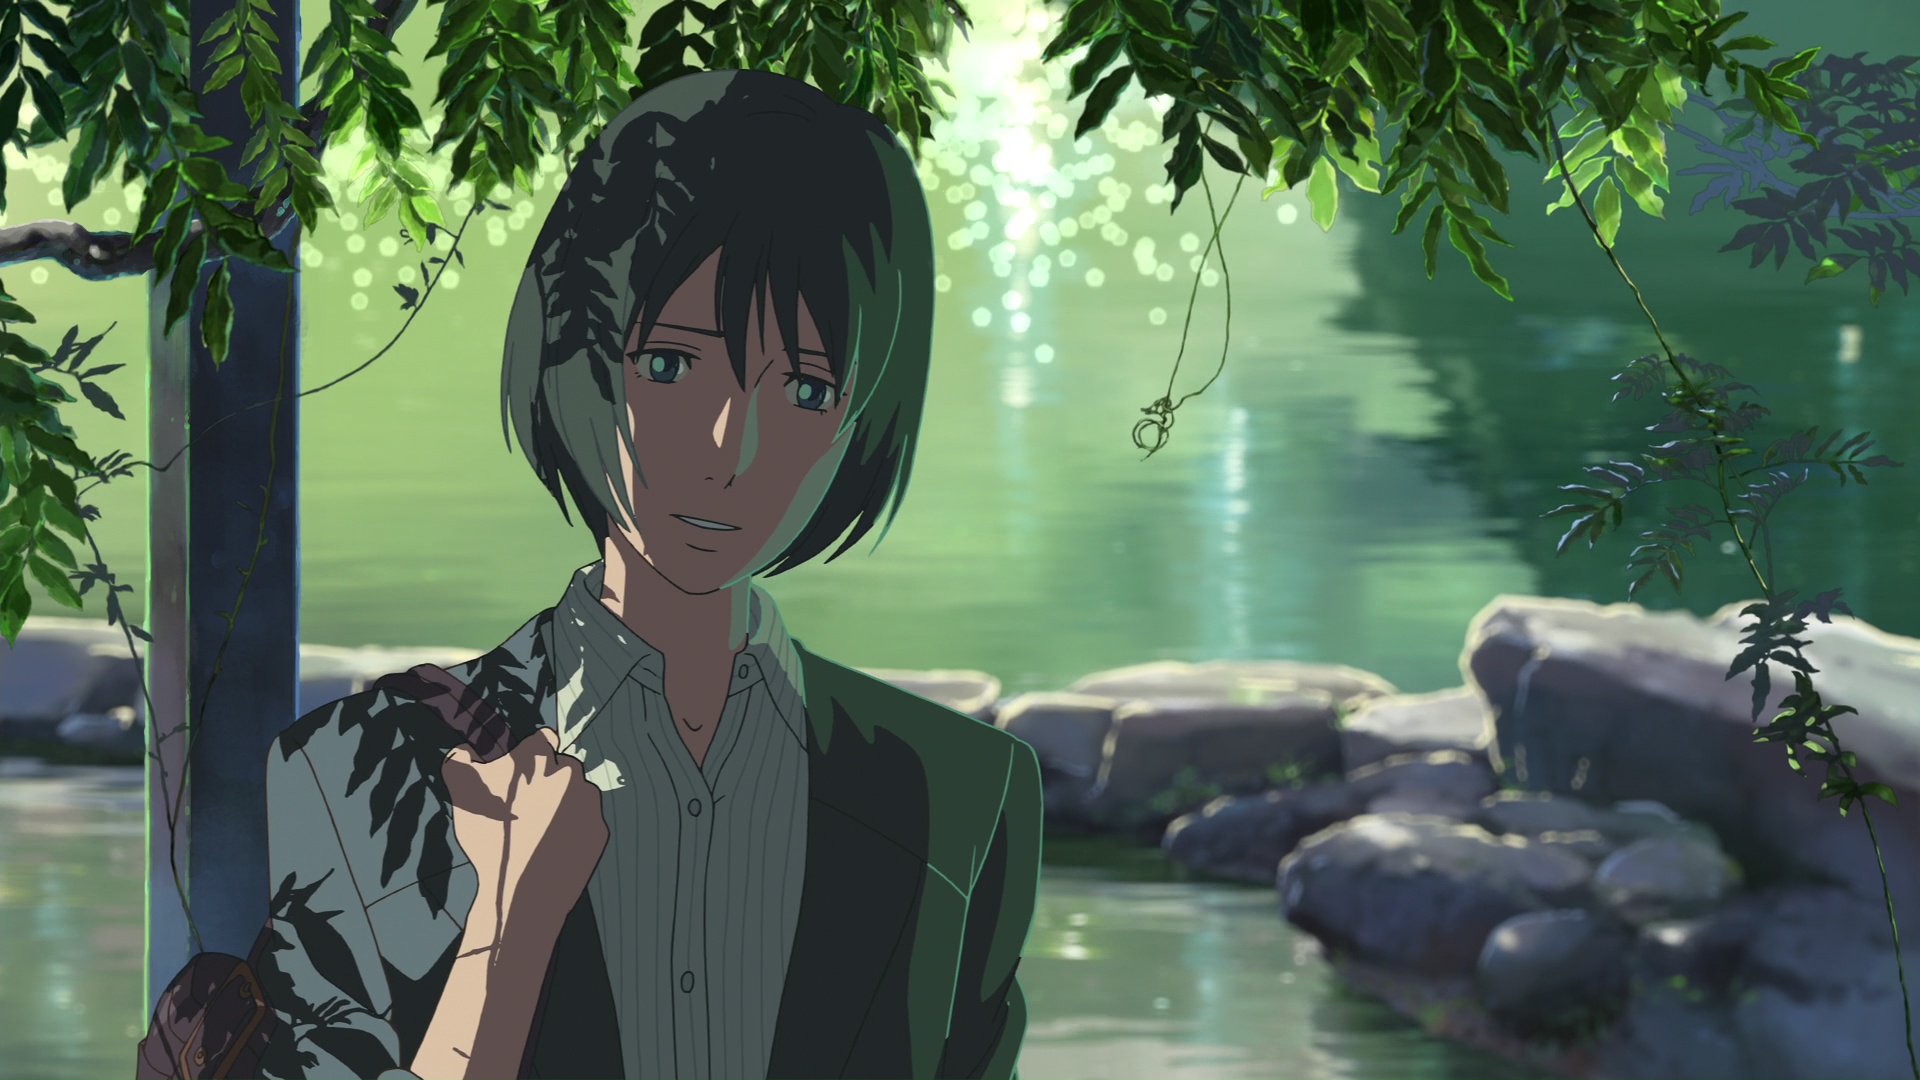 MikeHattsu Anime Journeys: The Garden of Words - Park